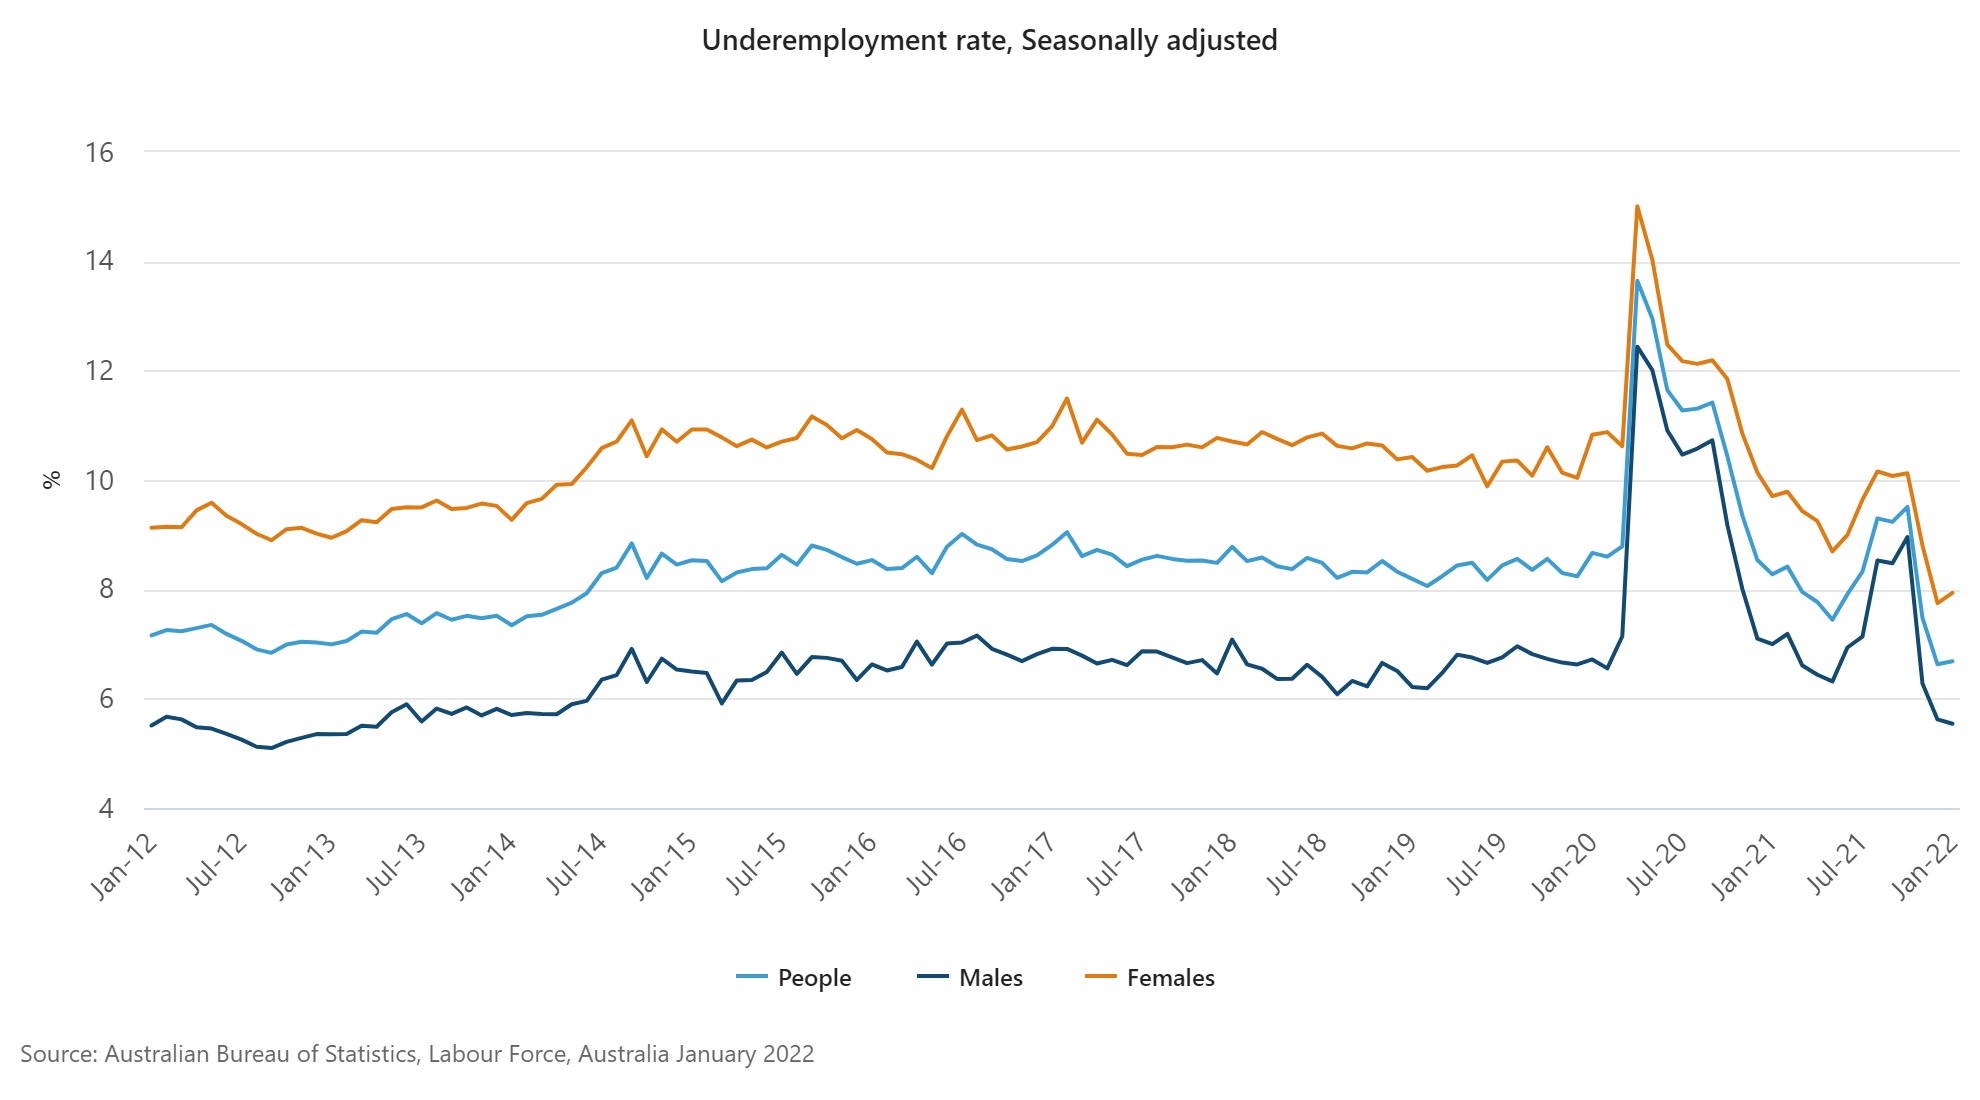 Chart of seasonally adjusted underemployment rate in Australia, Australian Bureau of Statistics